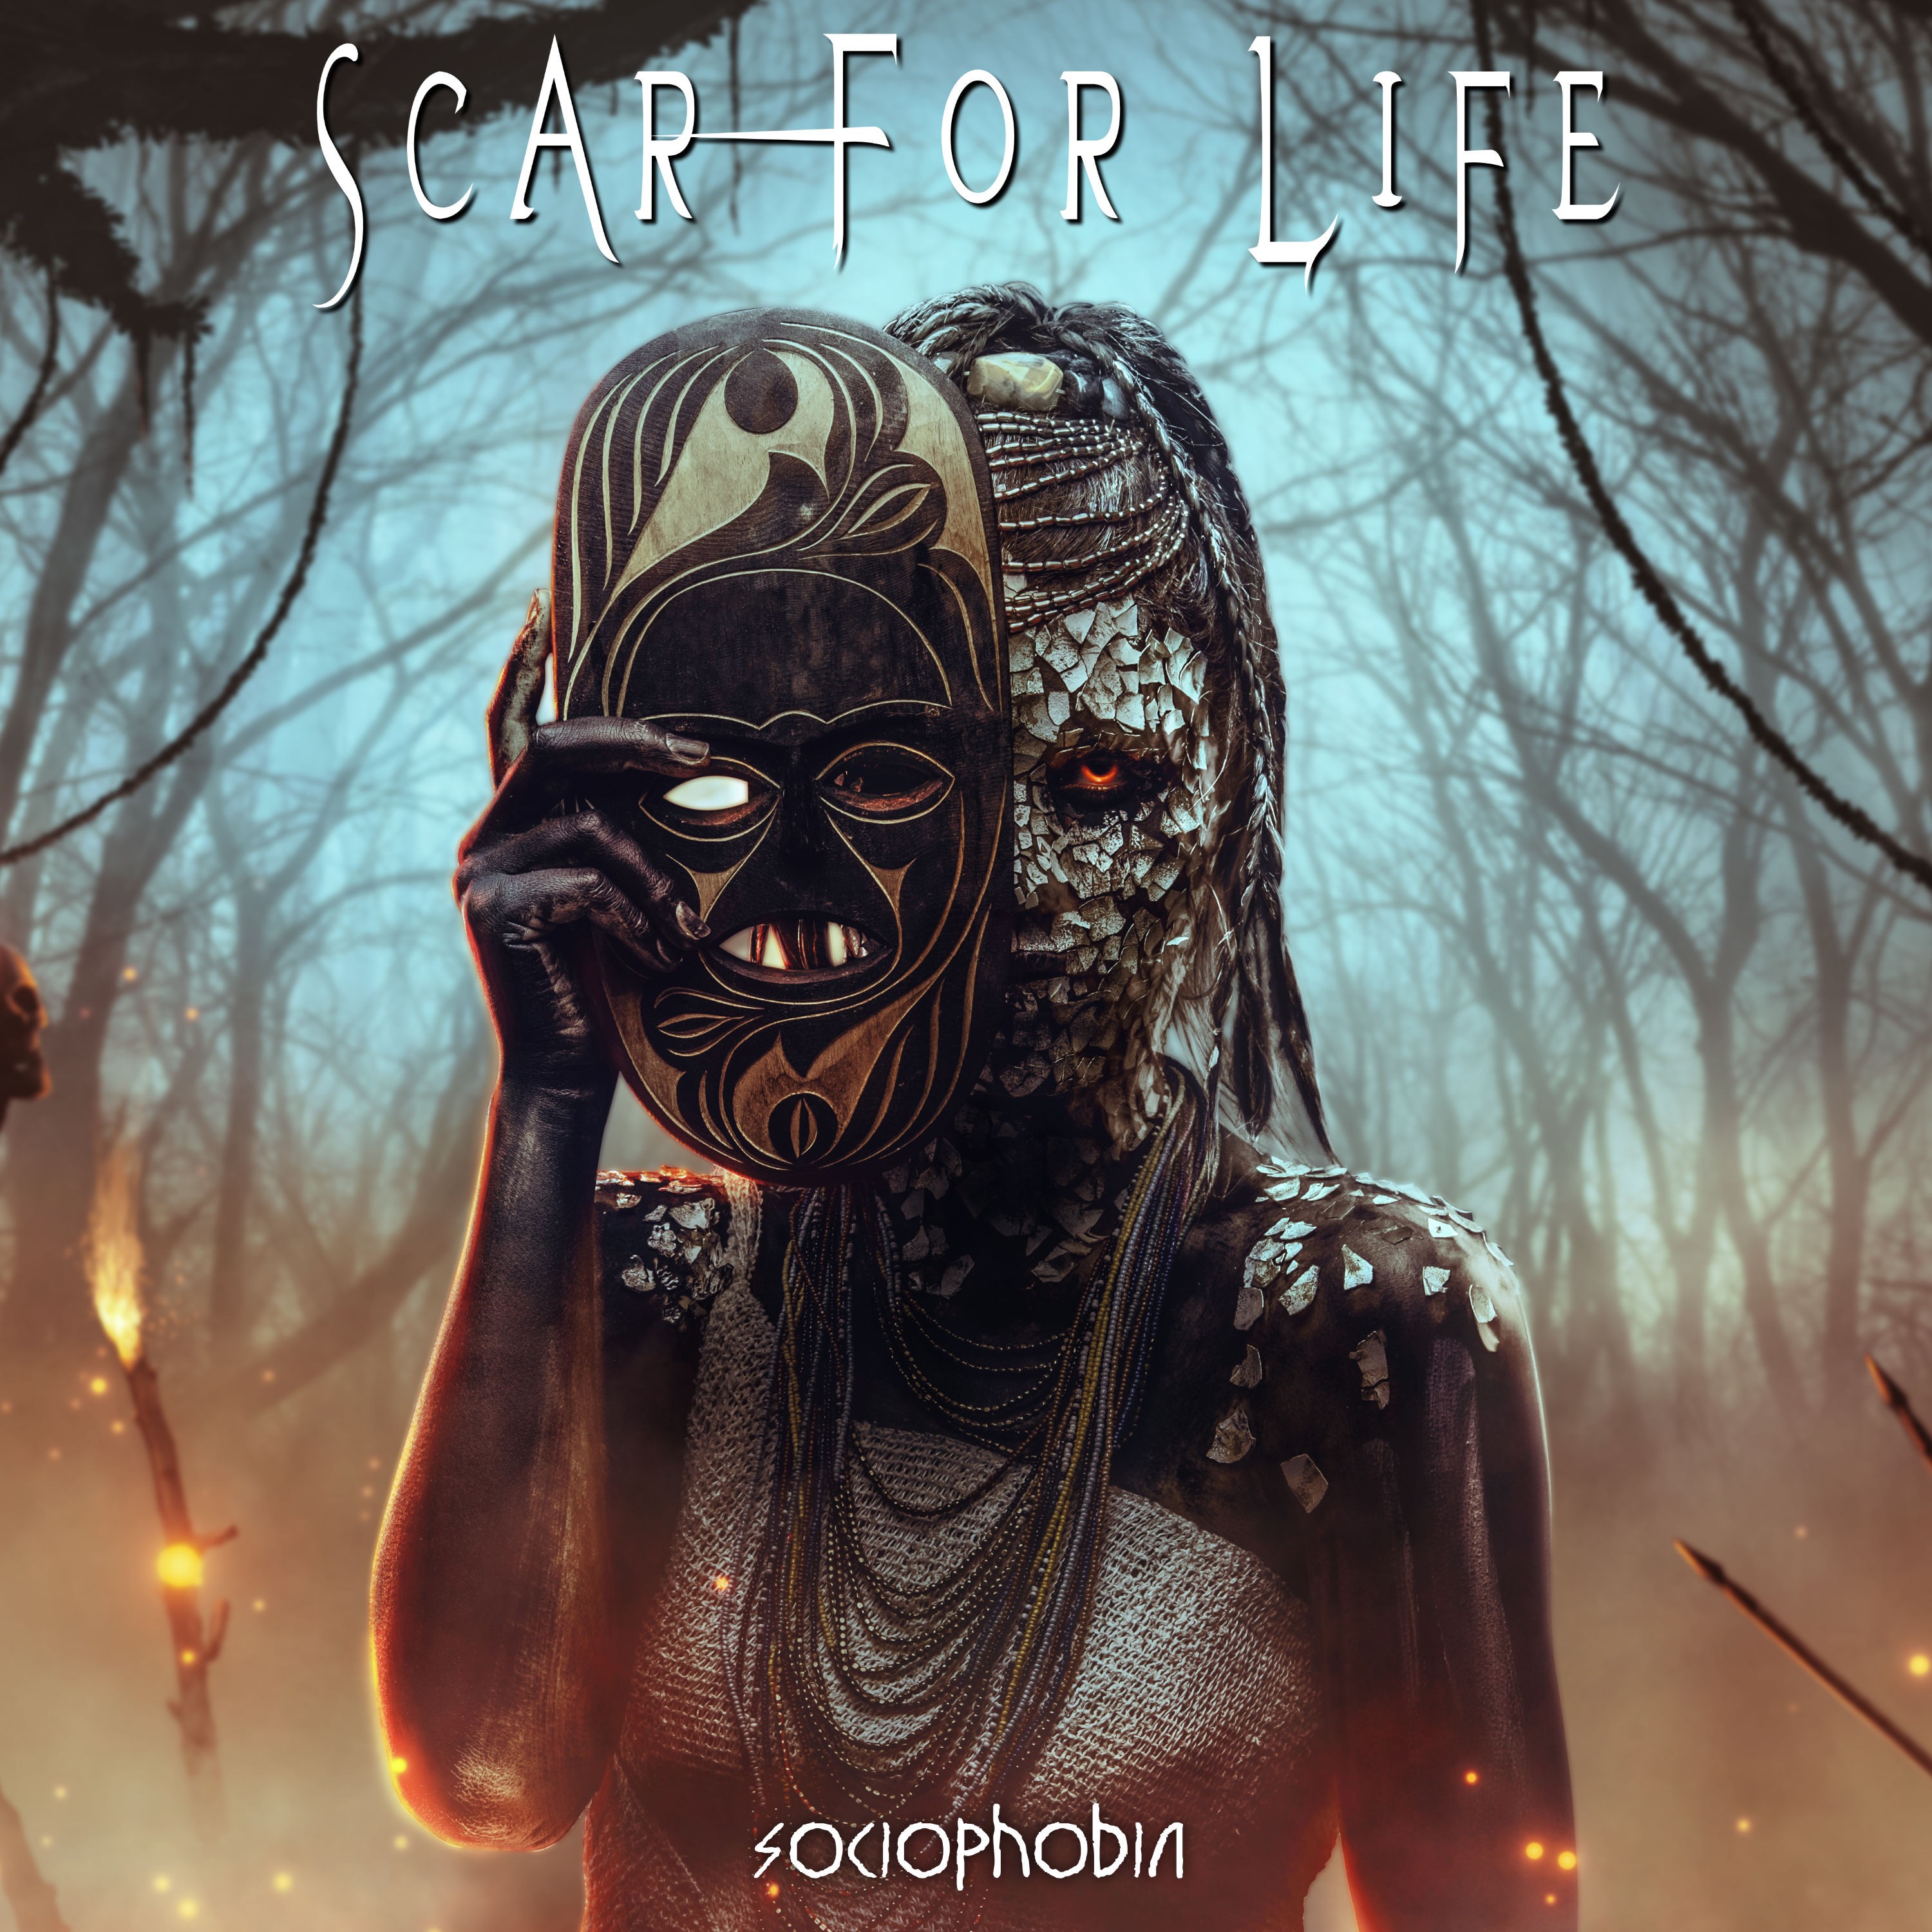 Scar For Life – Sociophobia (2022) 24bit FLAC